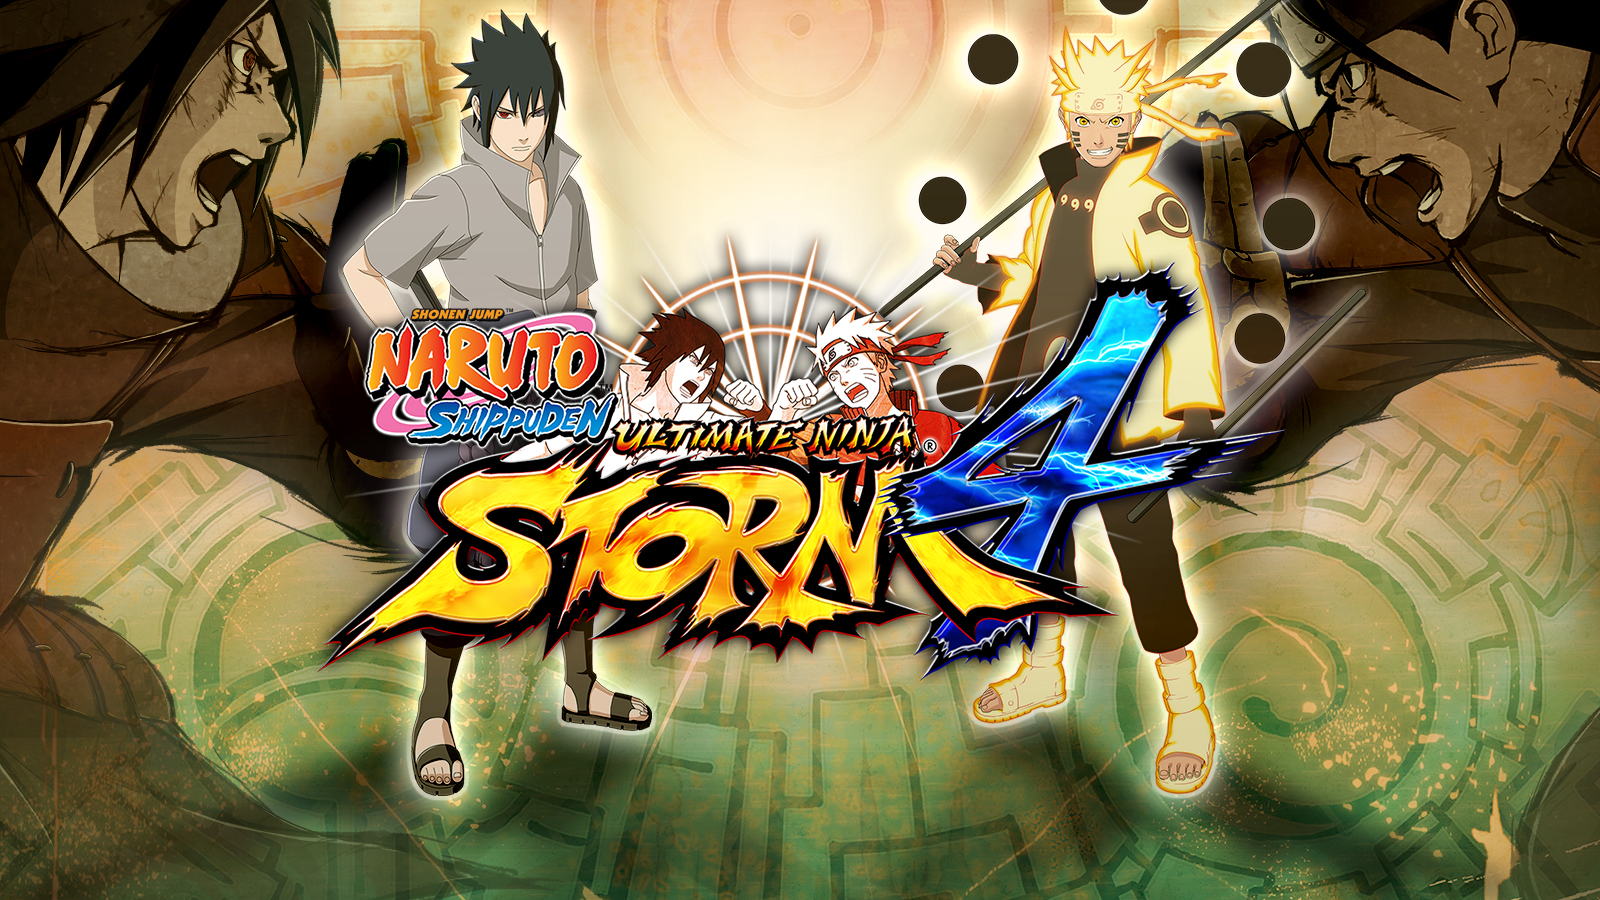 naruto shippuden ultimate ninja storm 4 pc | Torrent Games
